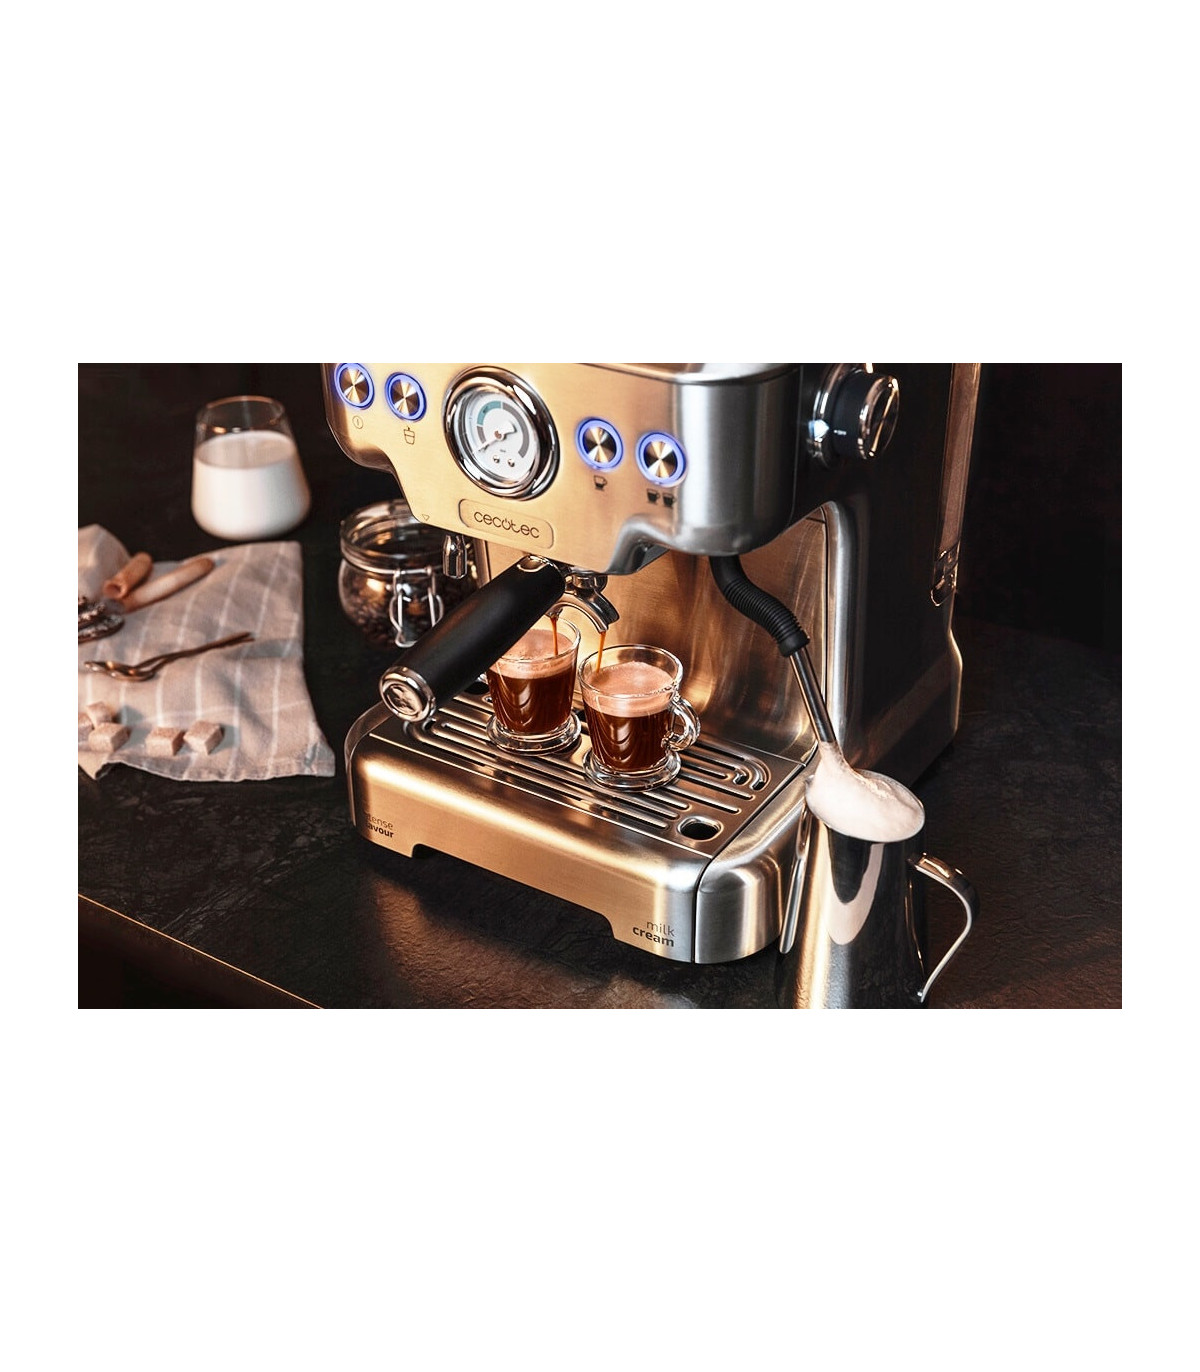 Power Espresso 20 Barista Cream CECOTEC VS De Longhi Macchina del